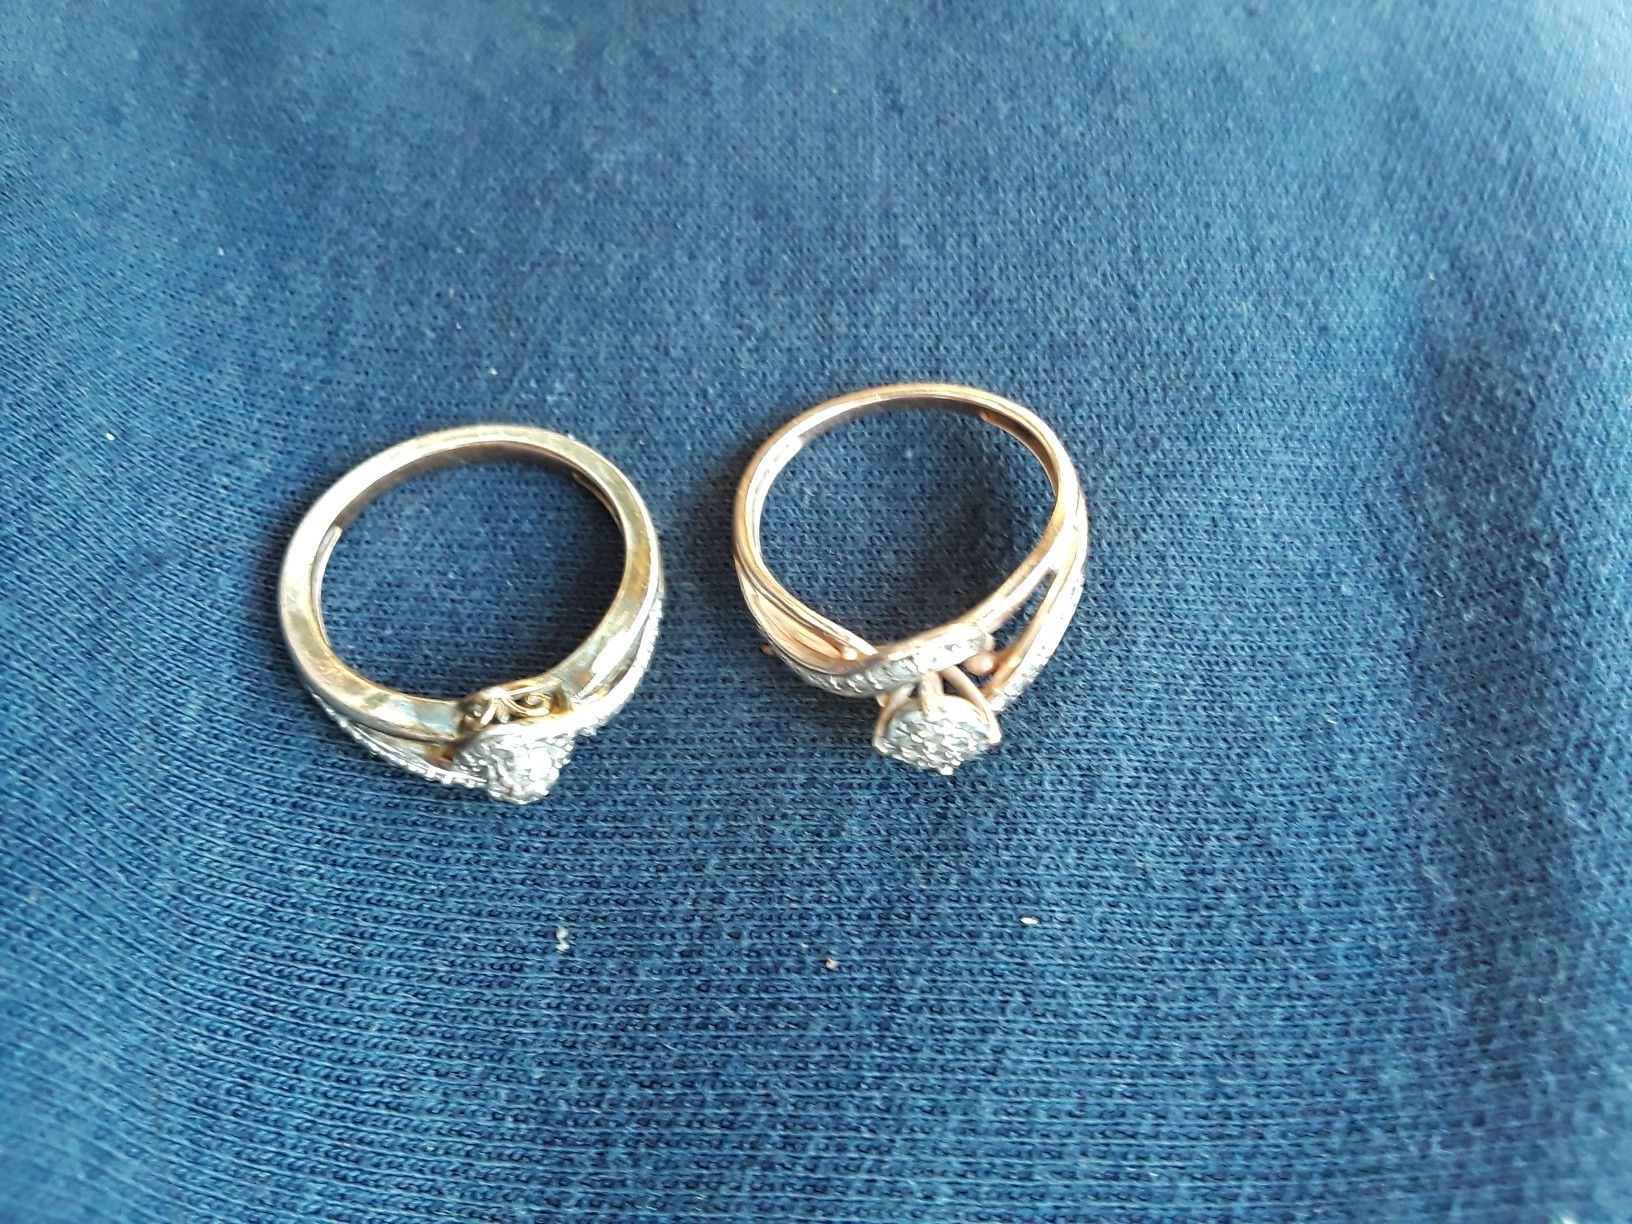 Size 7 ring, rings